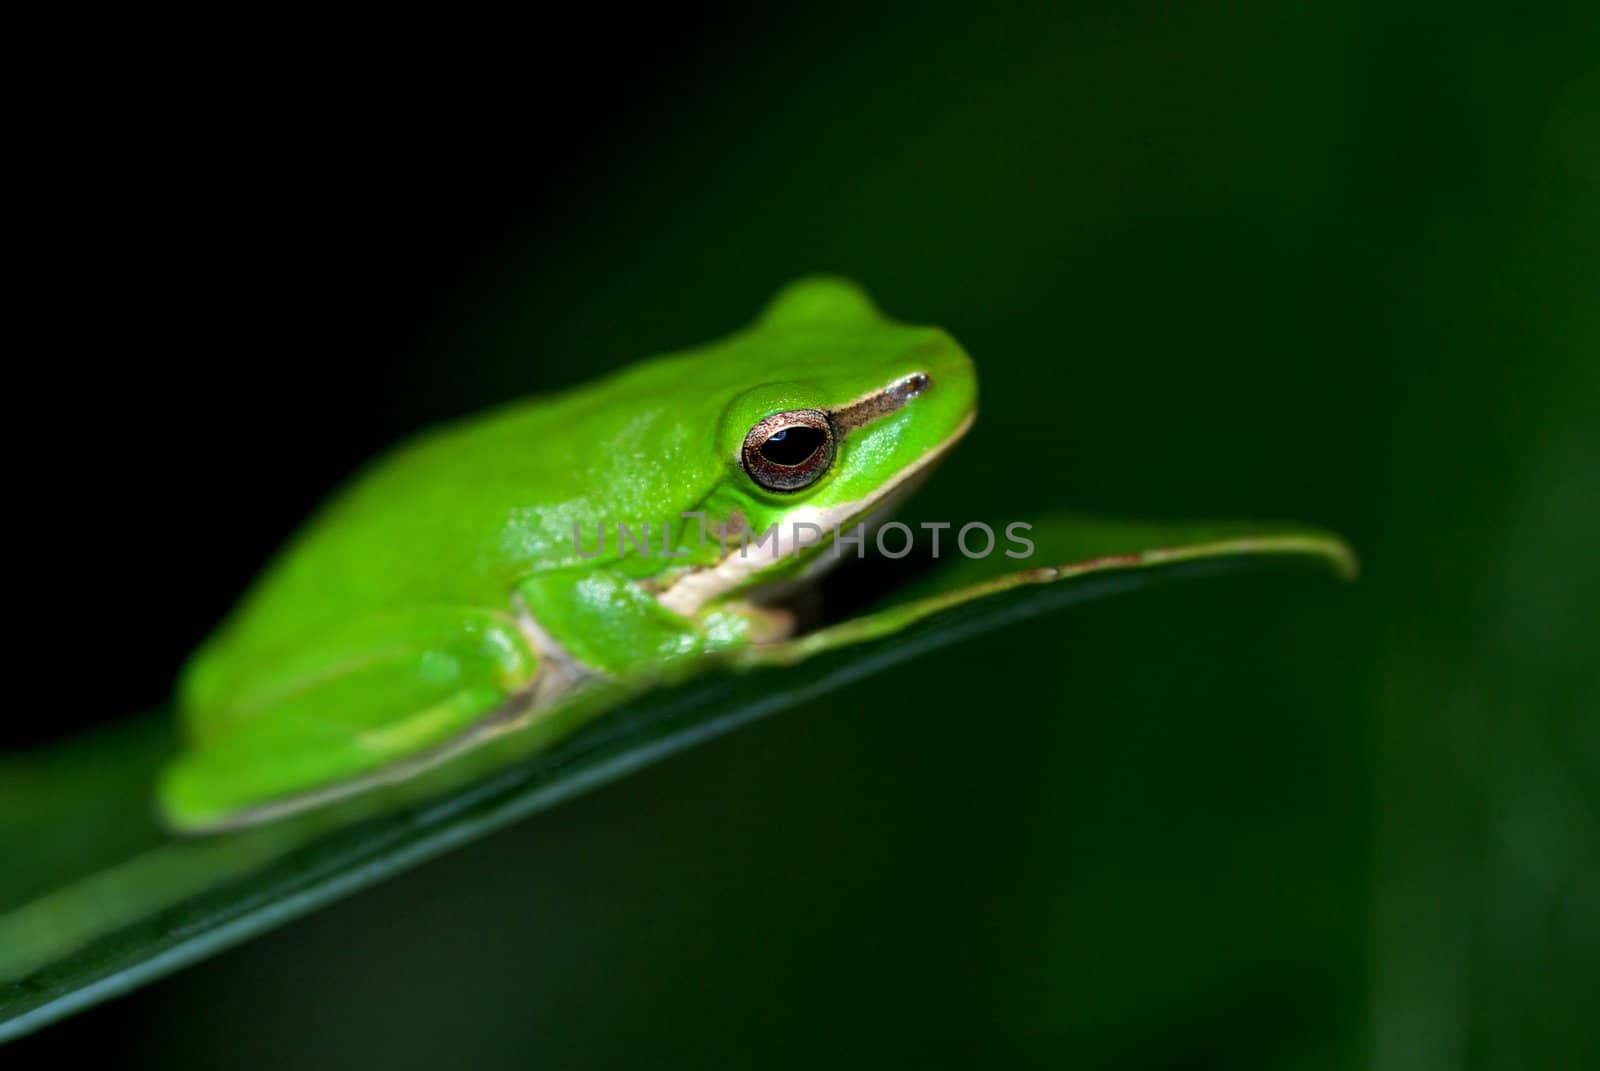 little fallax frog by clearviewstock